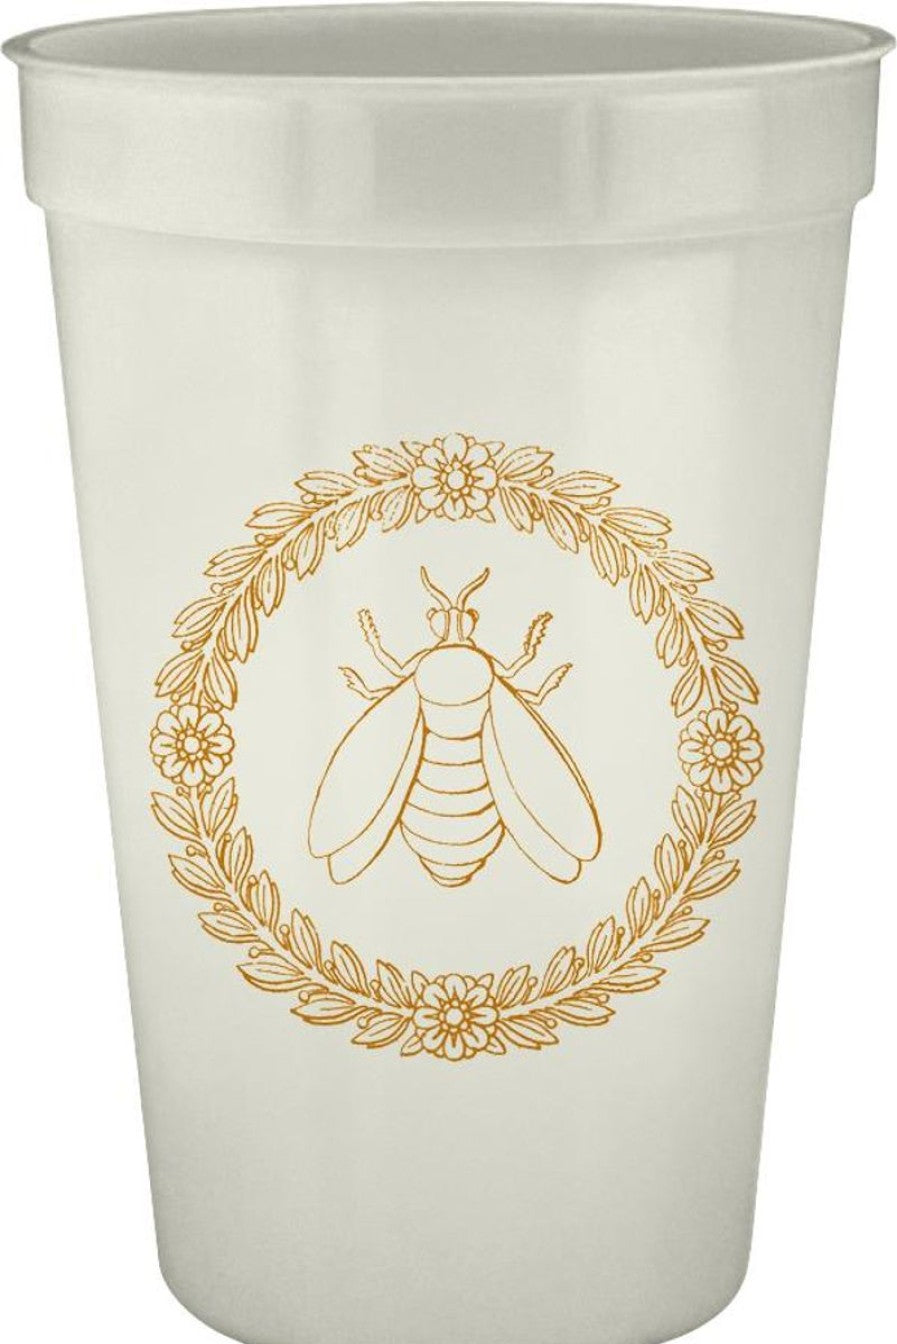 Alexa Pulitzer - Empire Bee 16oz Pearlized Cups